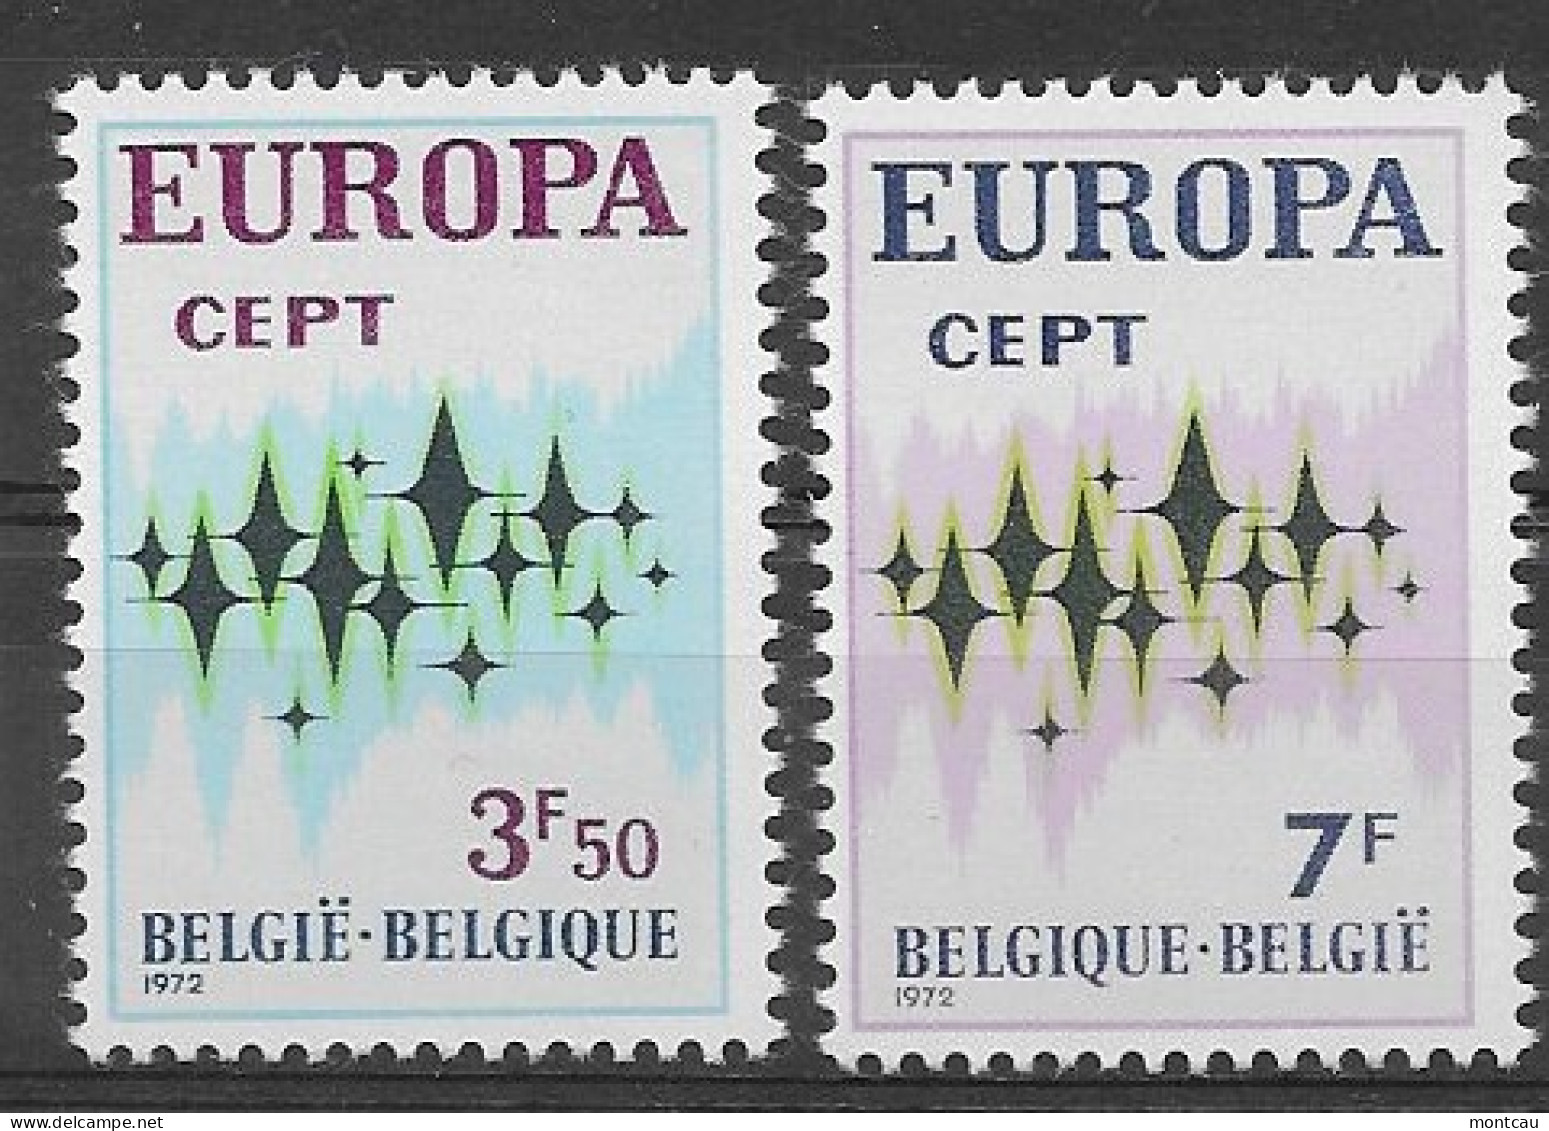 Belgica 1972.  Europa Mi 1678-79  (**) - 1972